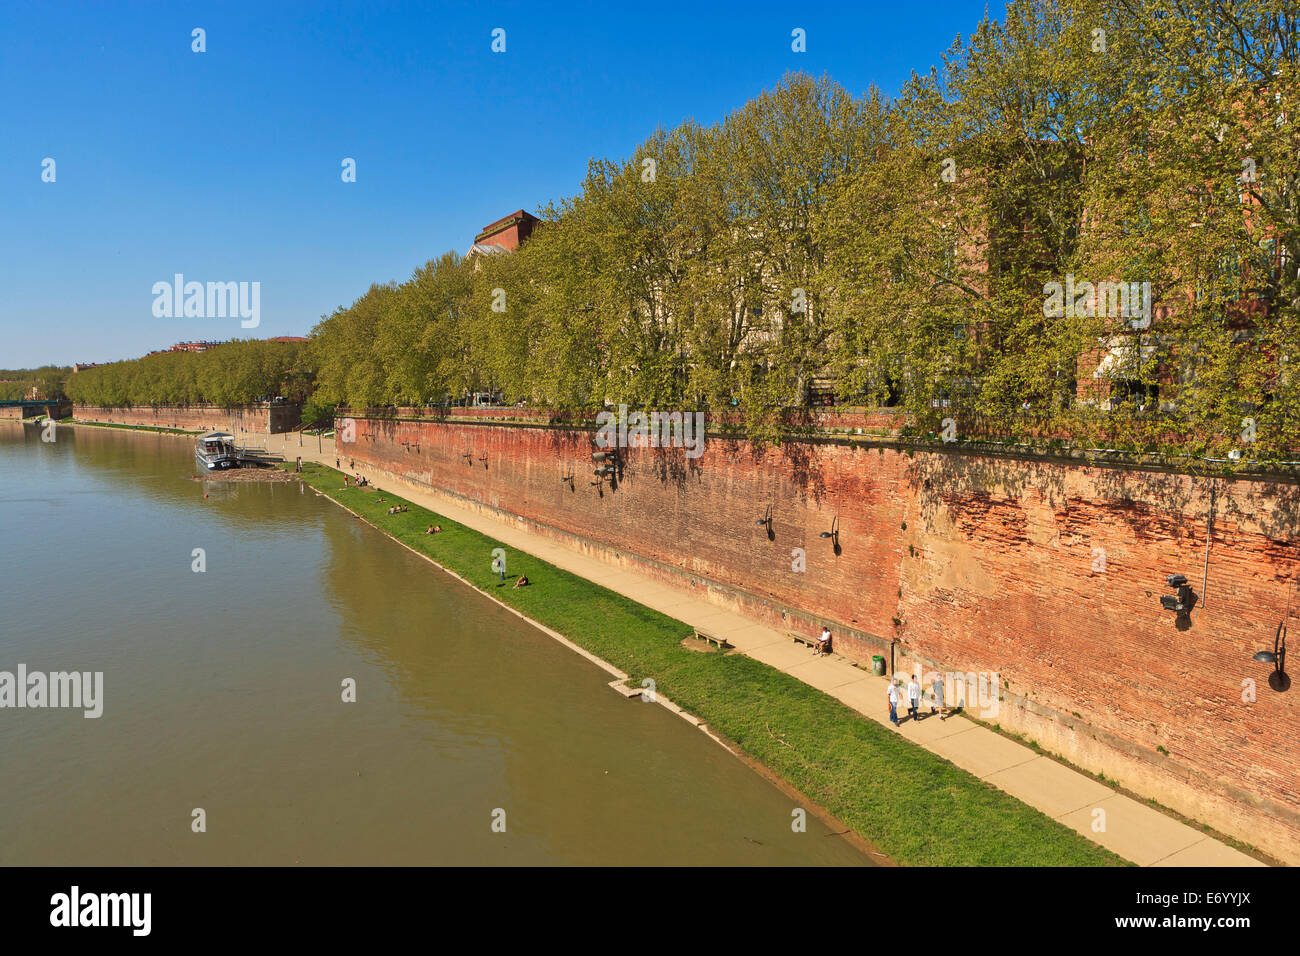 France, Toulouse, Garonne river banks Stock Photo